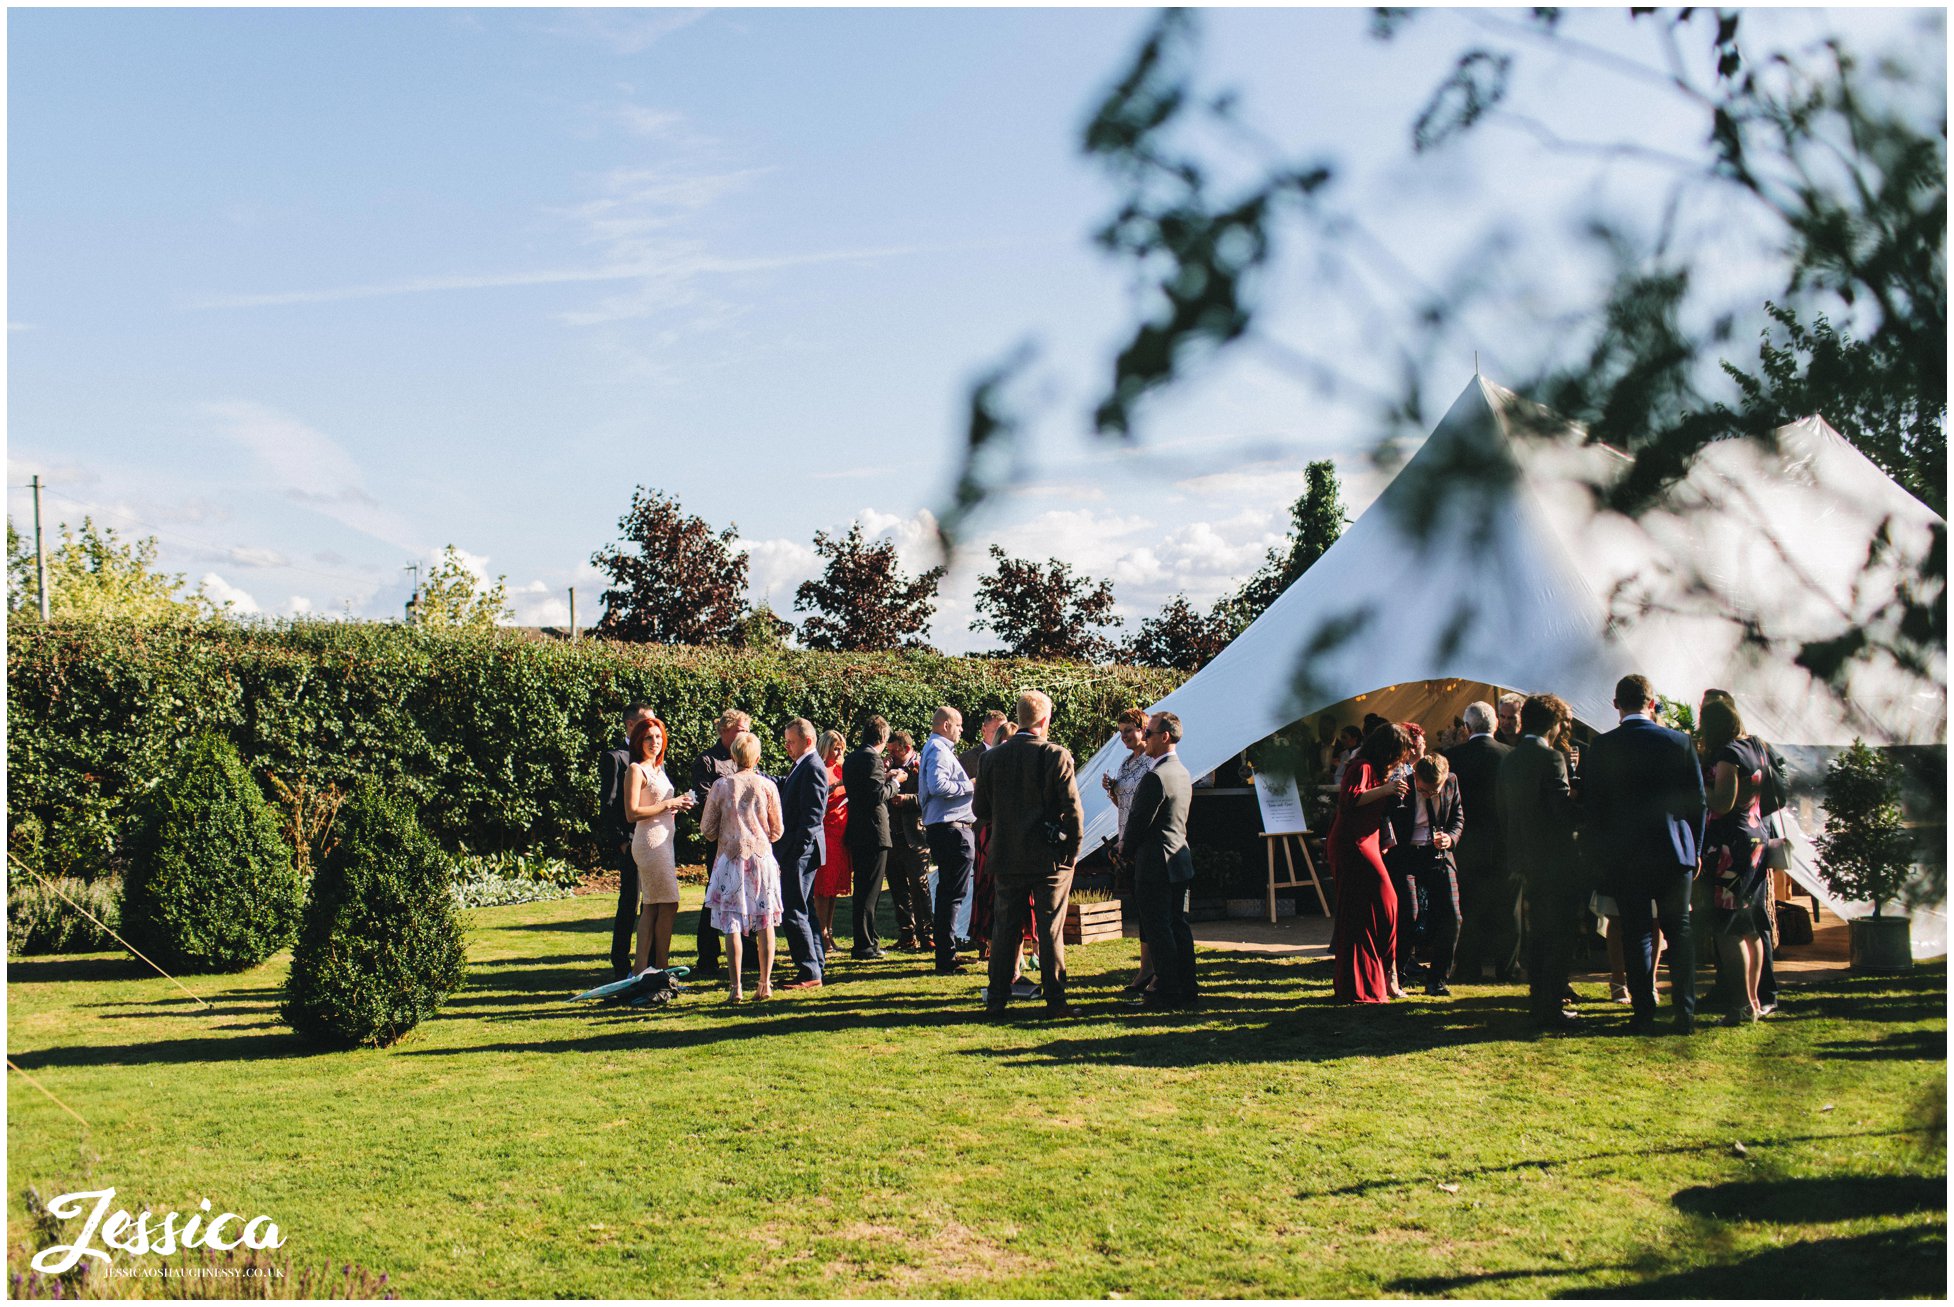 guests enjoy the sunshine at the farm wedding reception